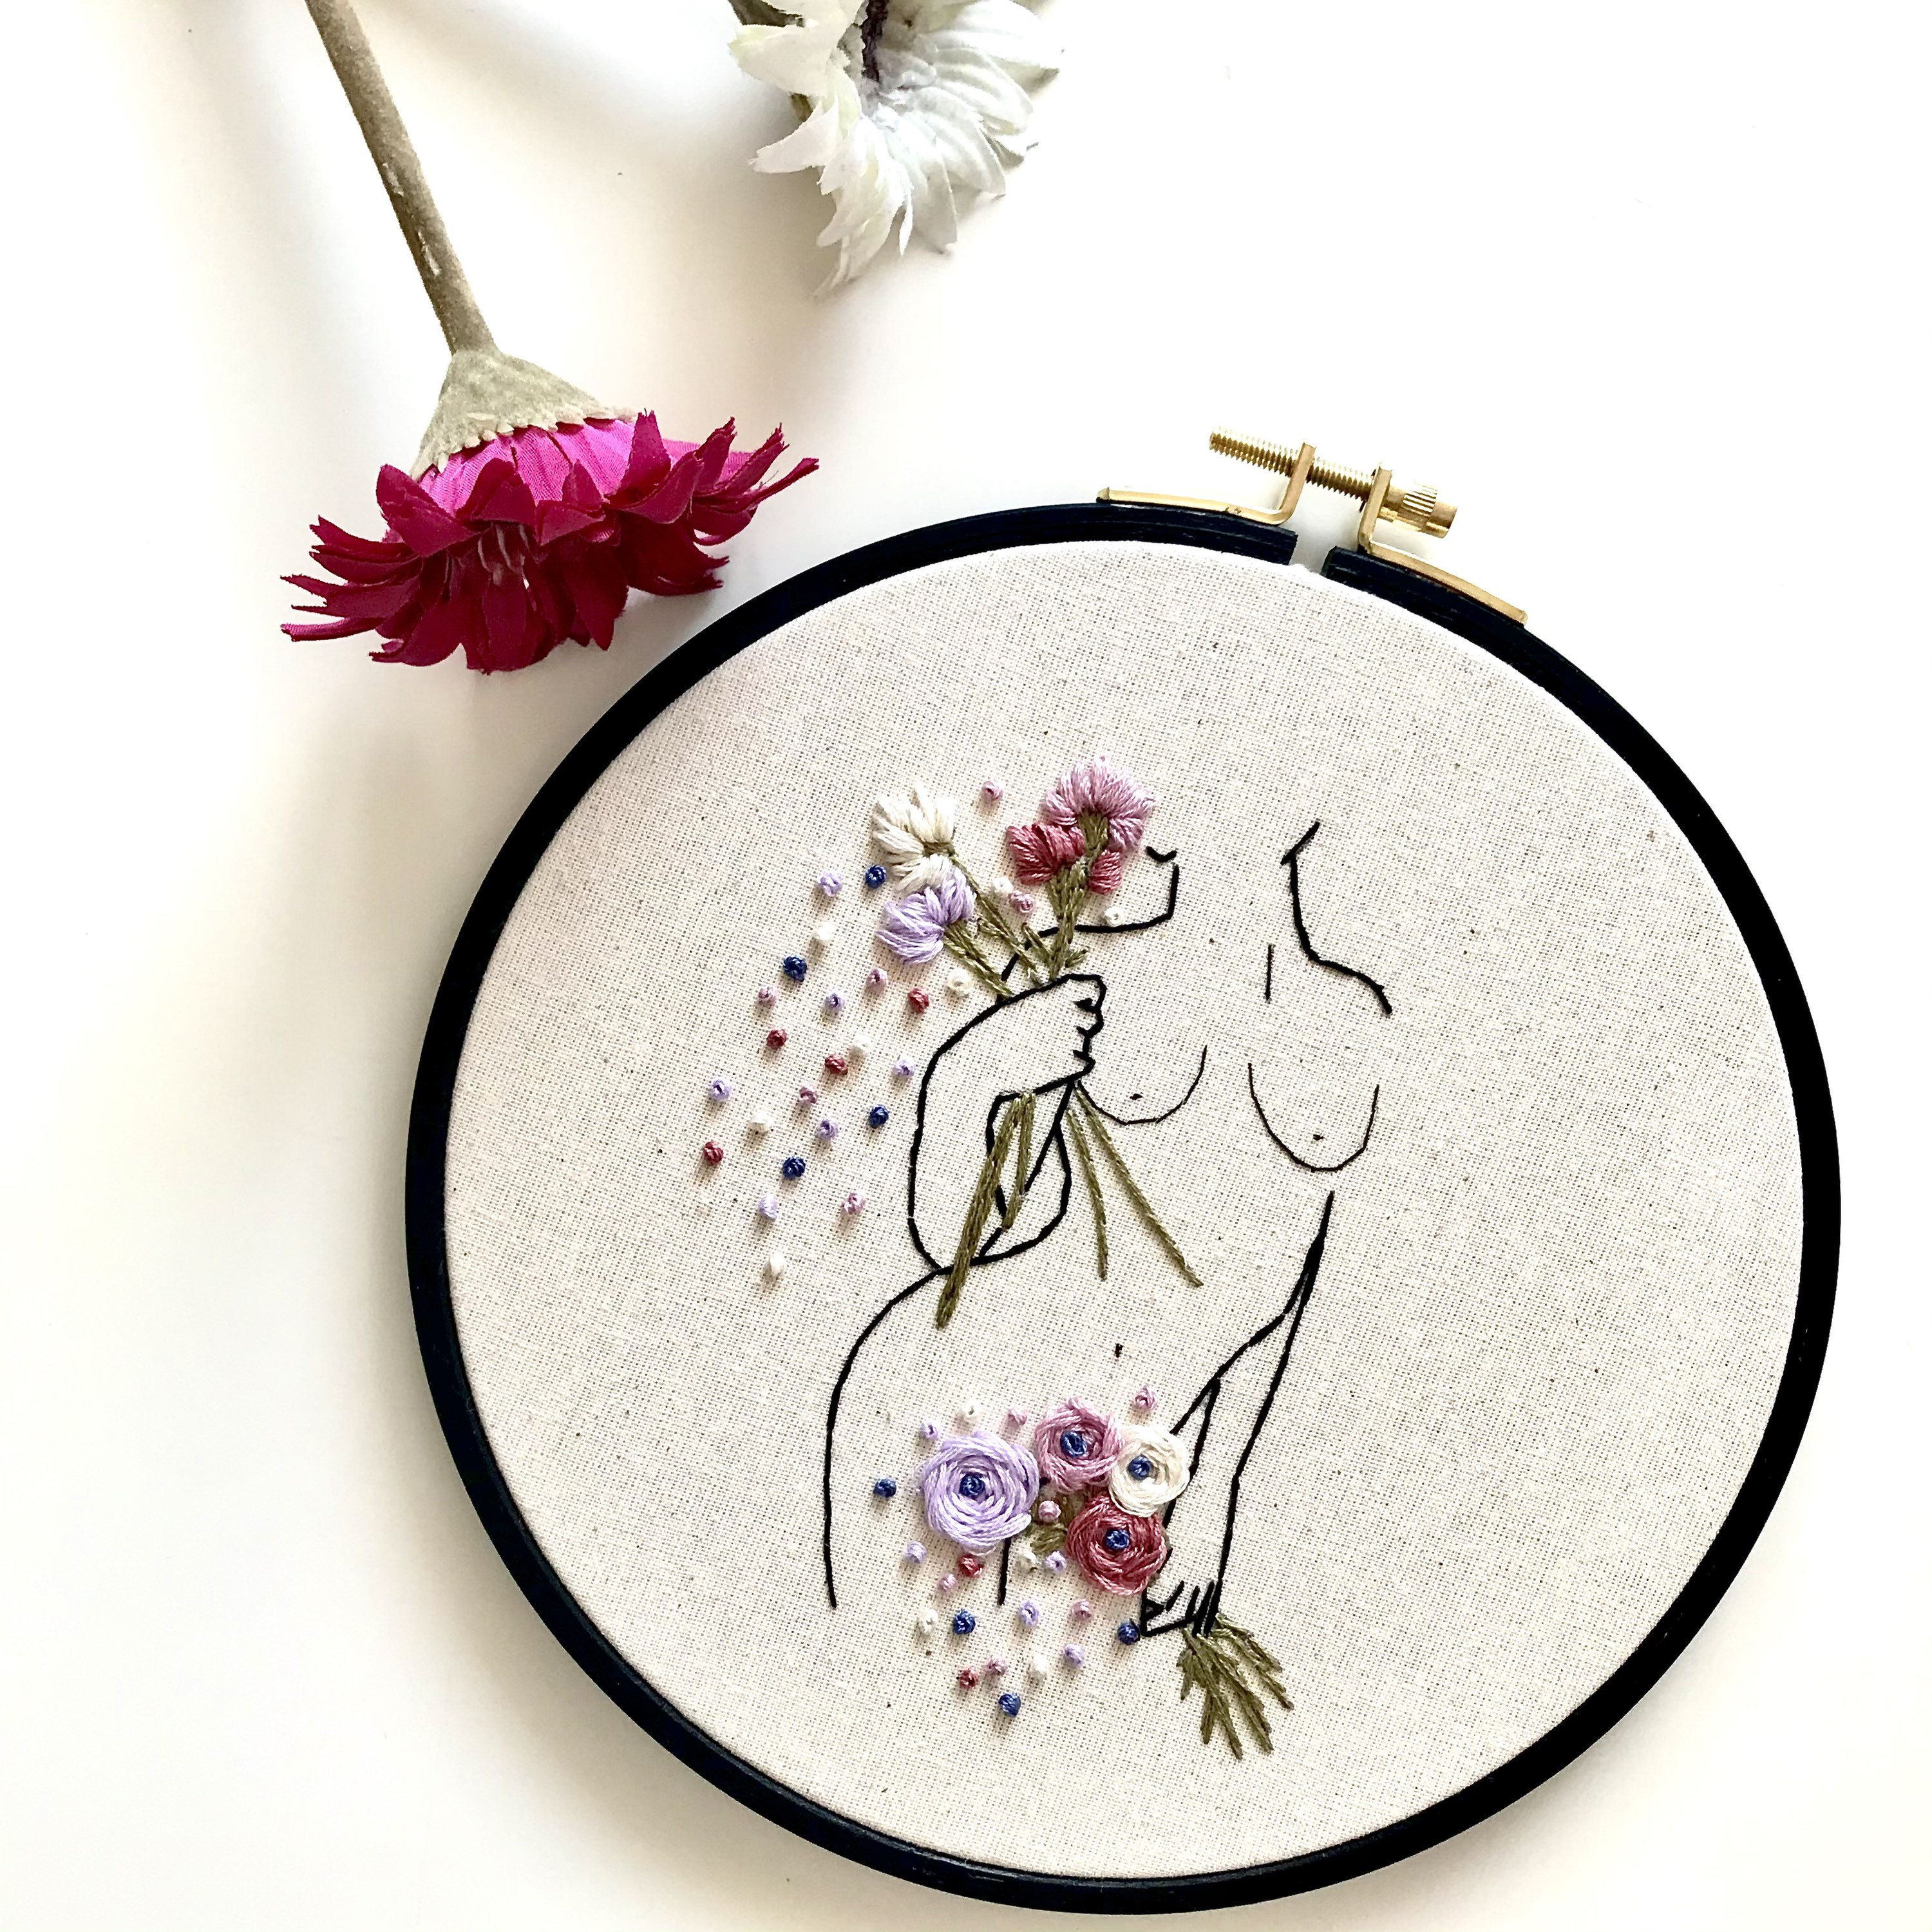 Naked Lady / Embroidery Kit / Needle Craft Kit / Female Hoop Art